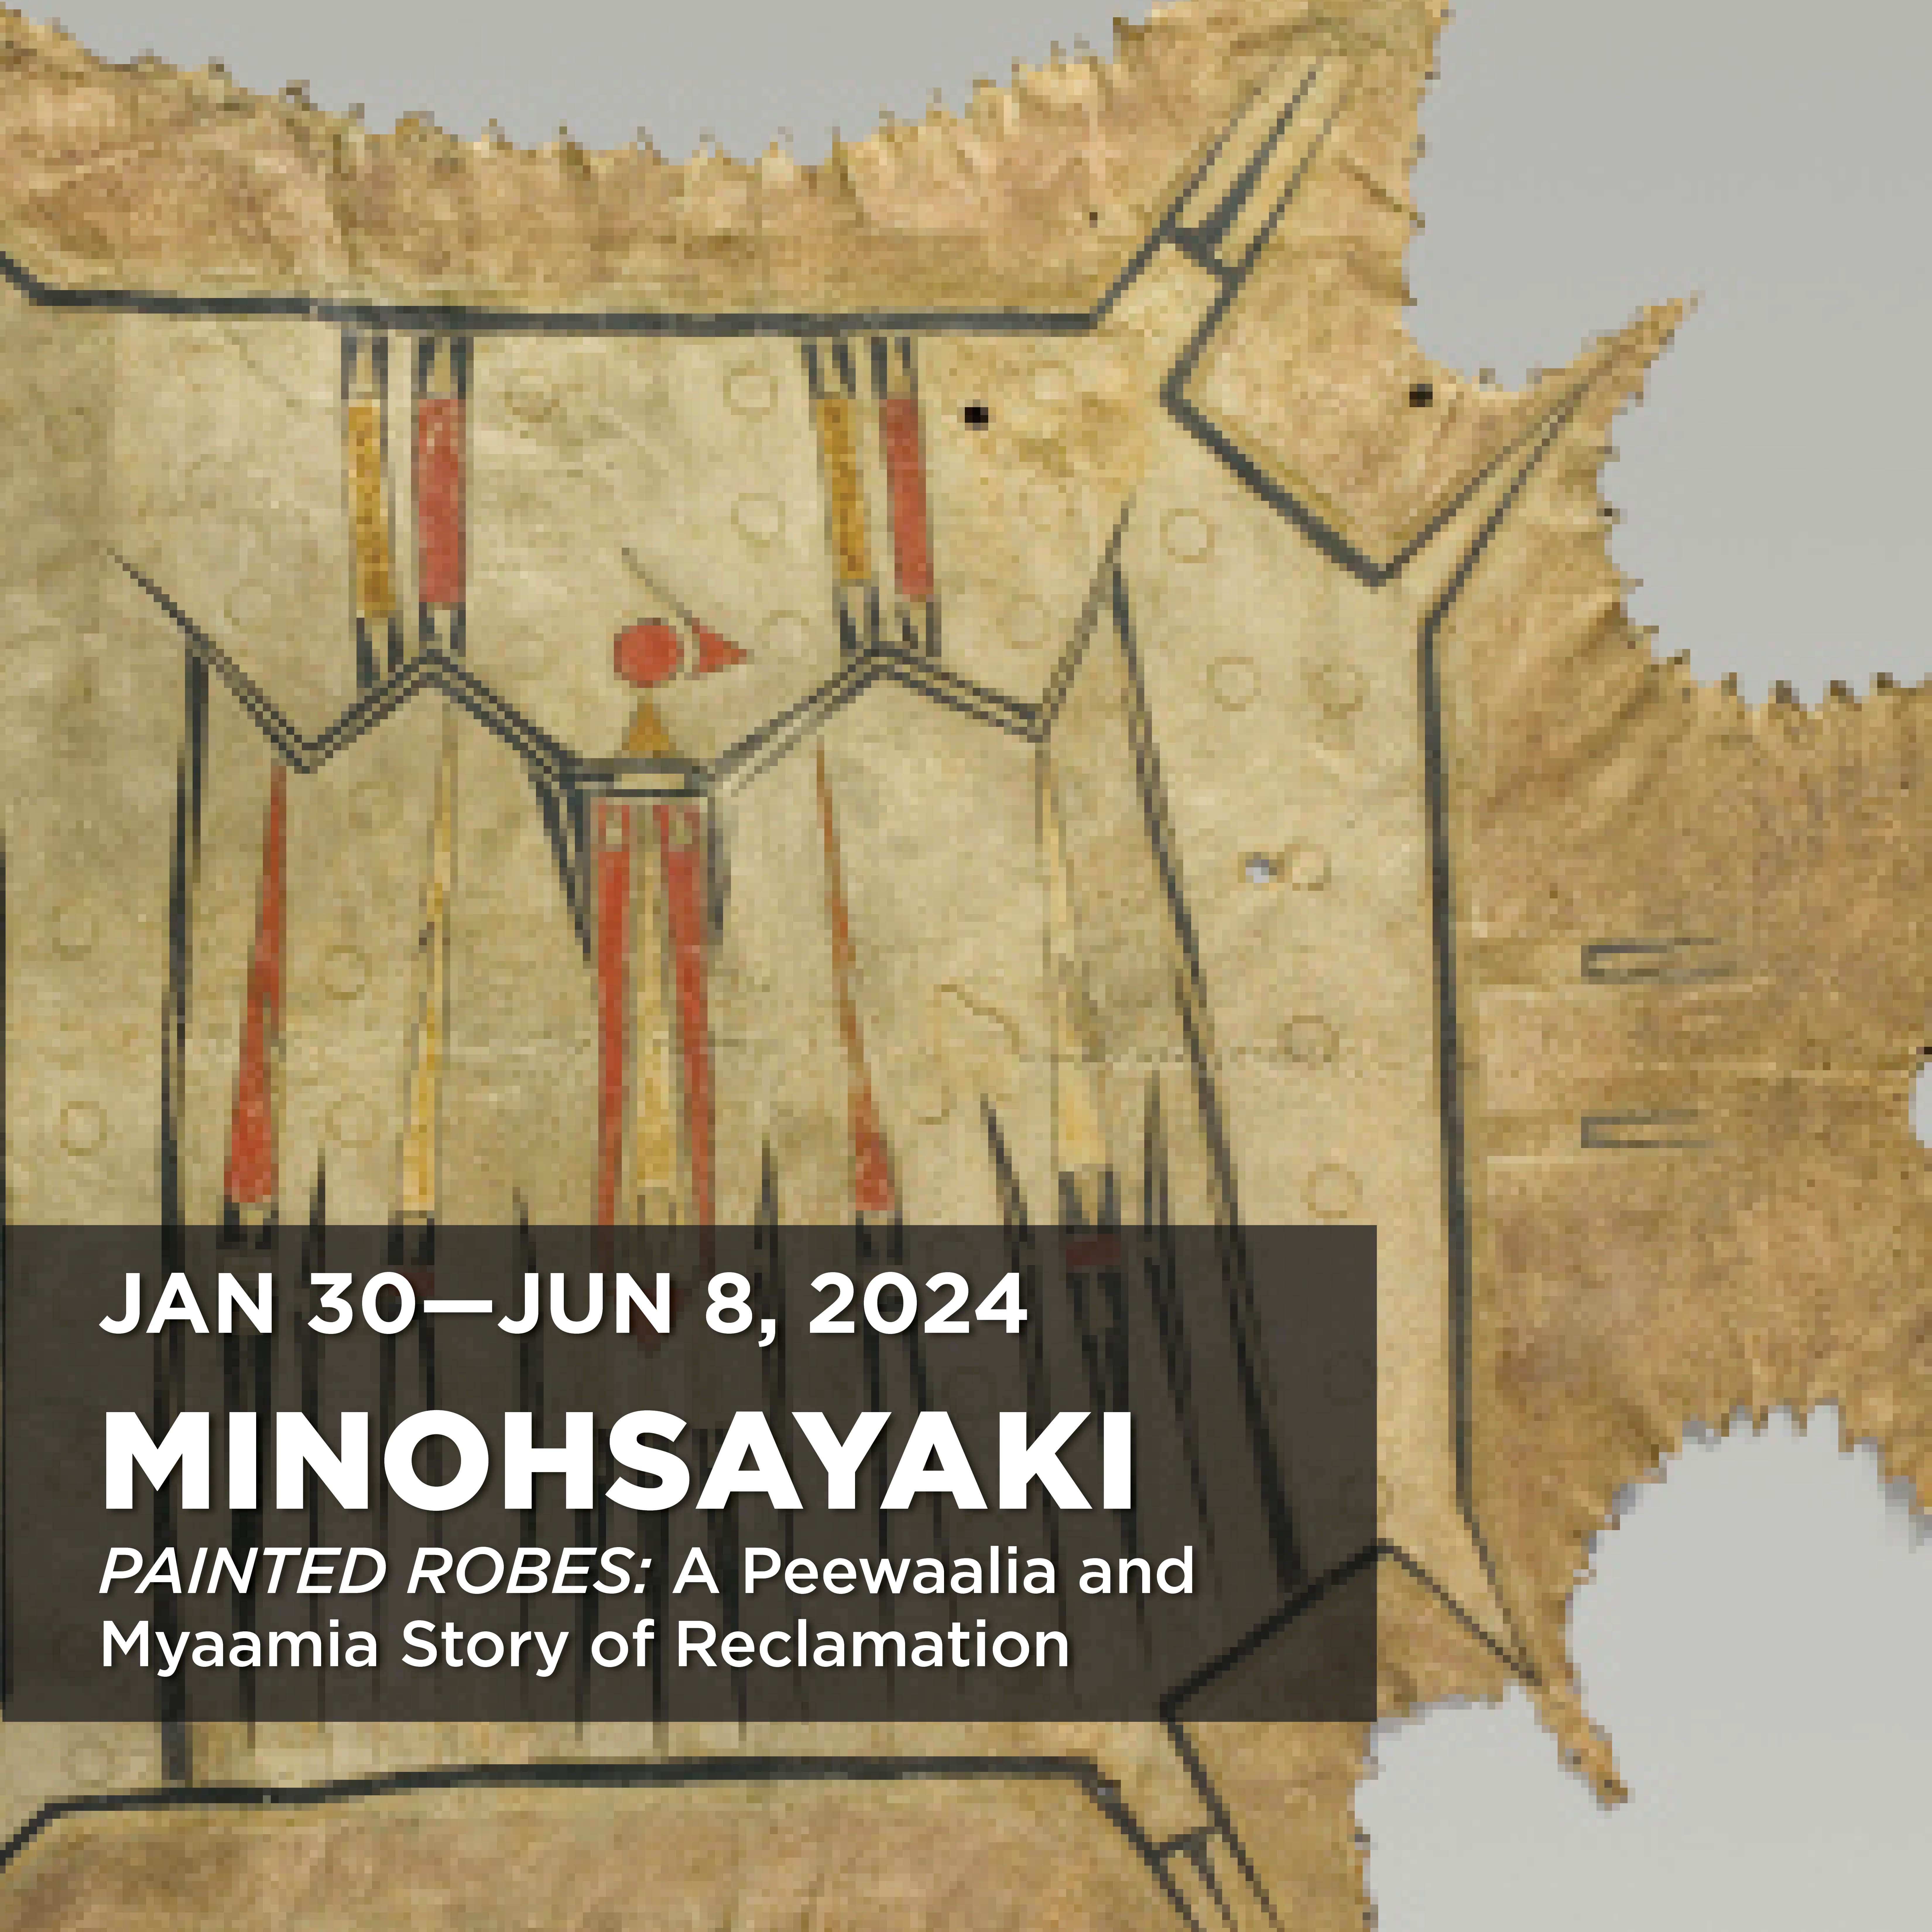 Minohsayaki ‘Painted Robes’: A Peewaalia and Myaamia Story of Reclamation